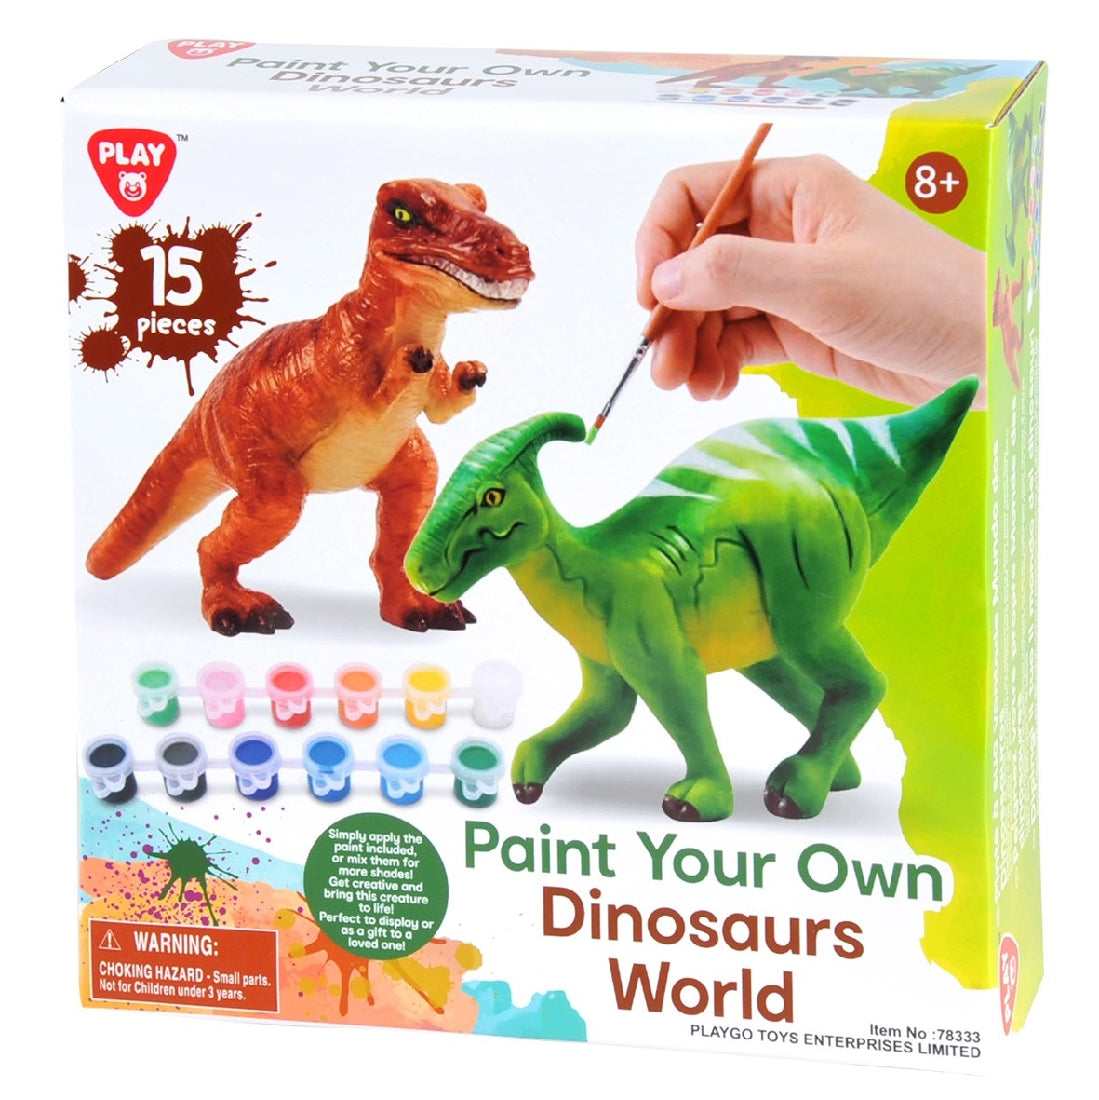 Playgo PYO Dinosaurs World